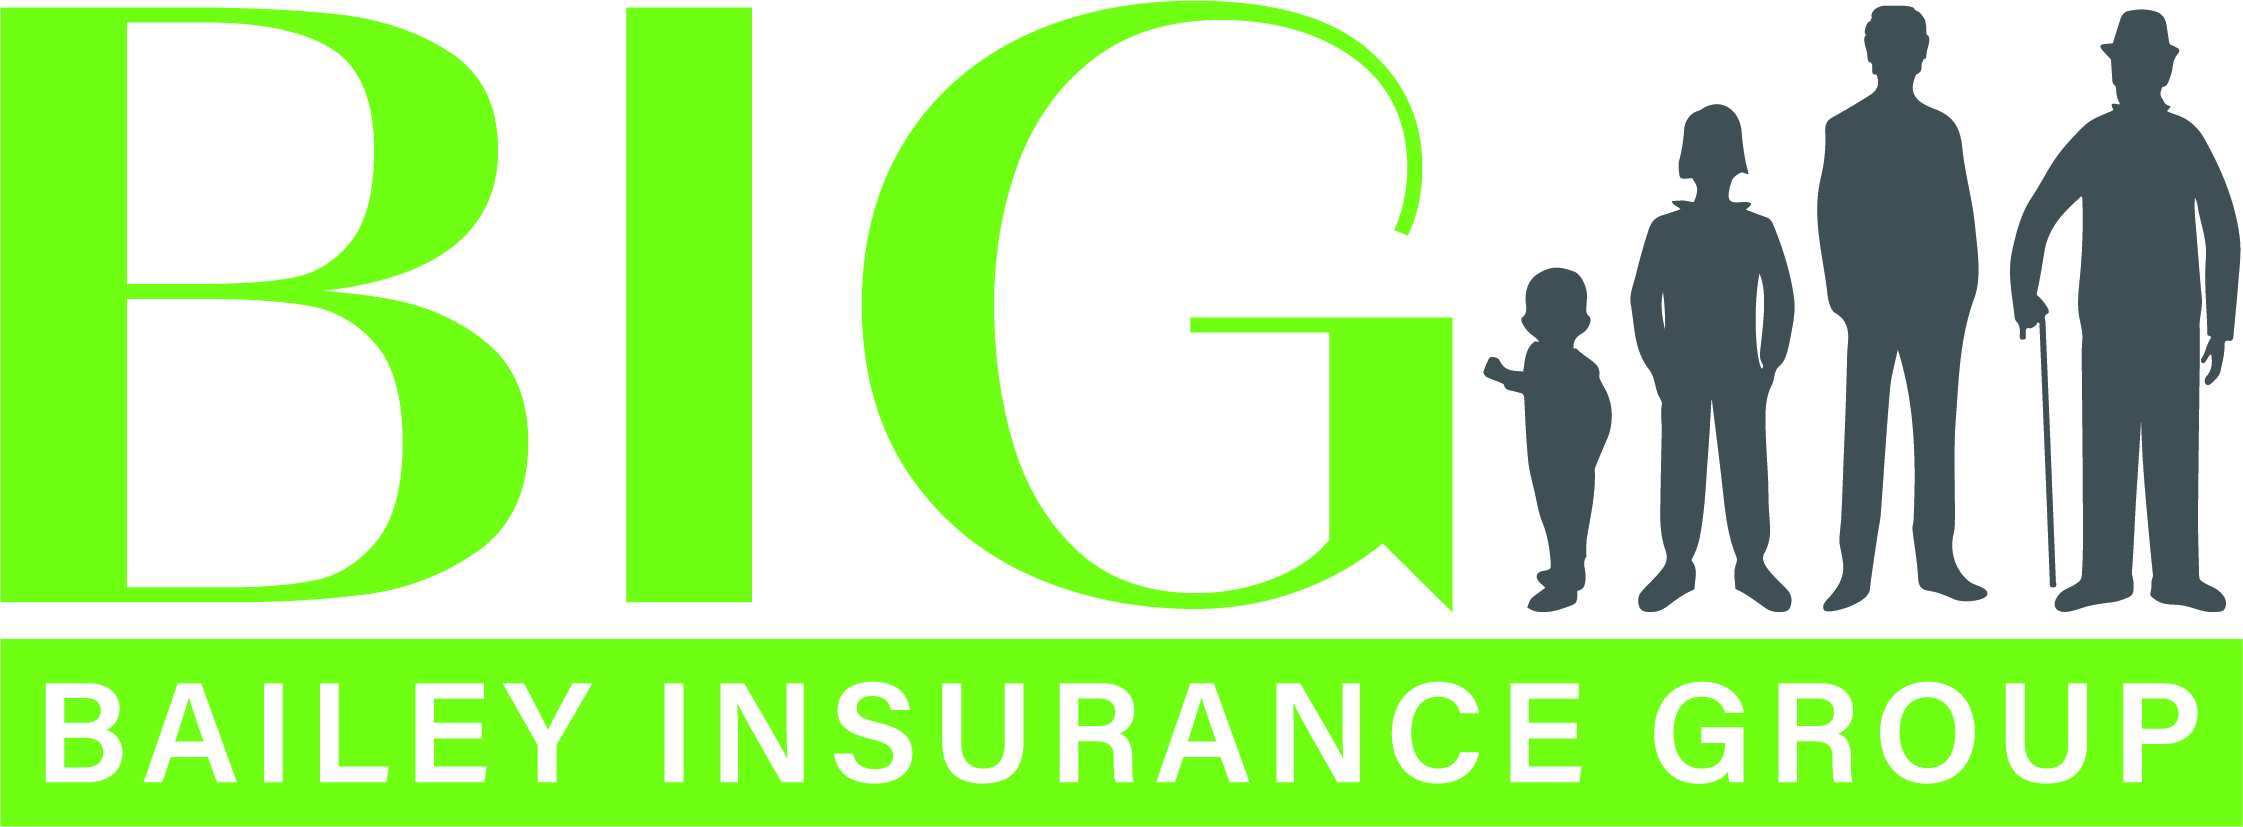 Bailey Insurance Group, LLC